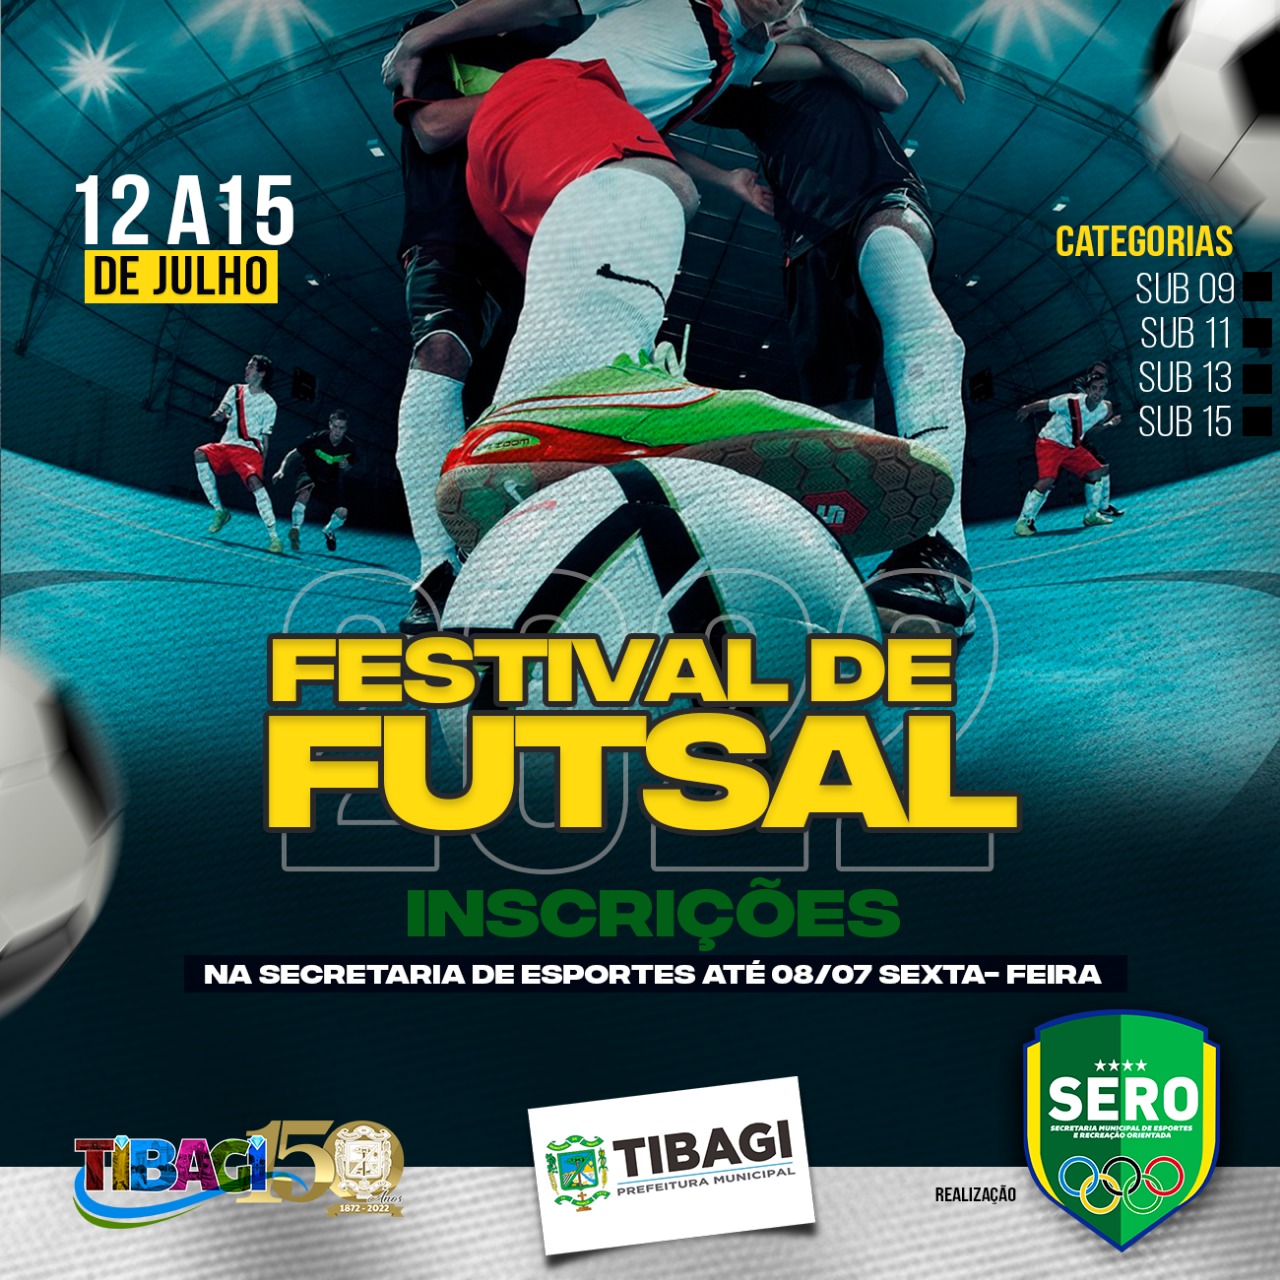 Esporte de Tibagi realiza festival de futsal na próxima semana